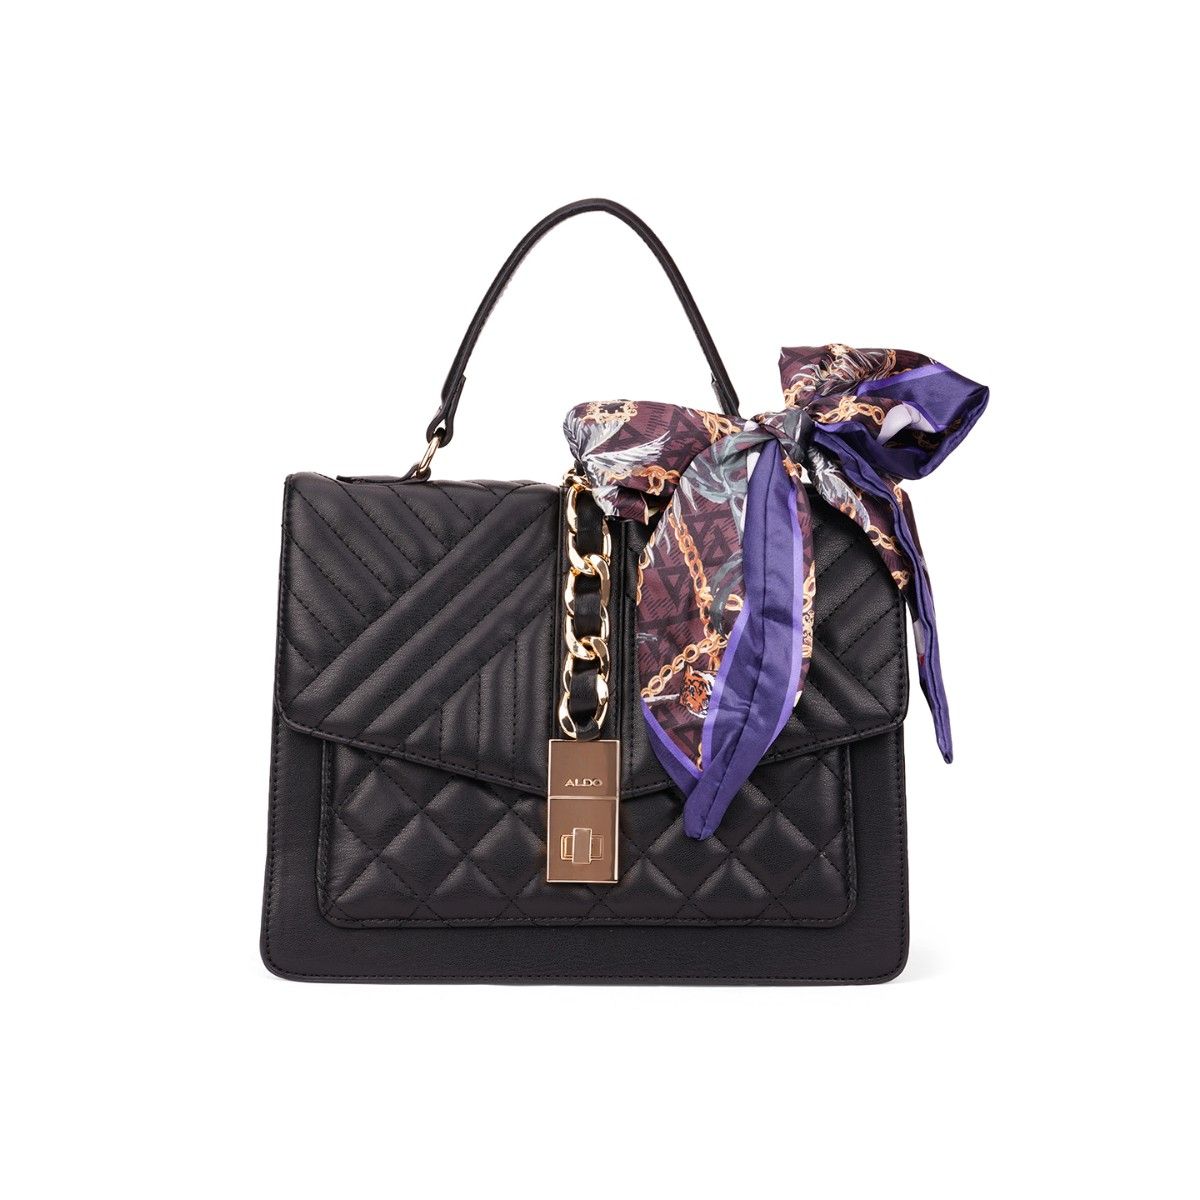 ALDO women Handbags | Top handle bag, Purses, Satchel bags